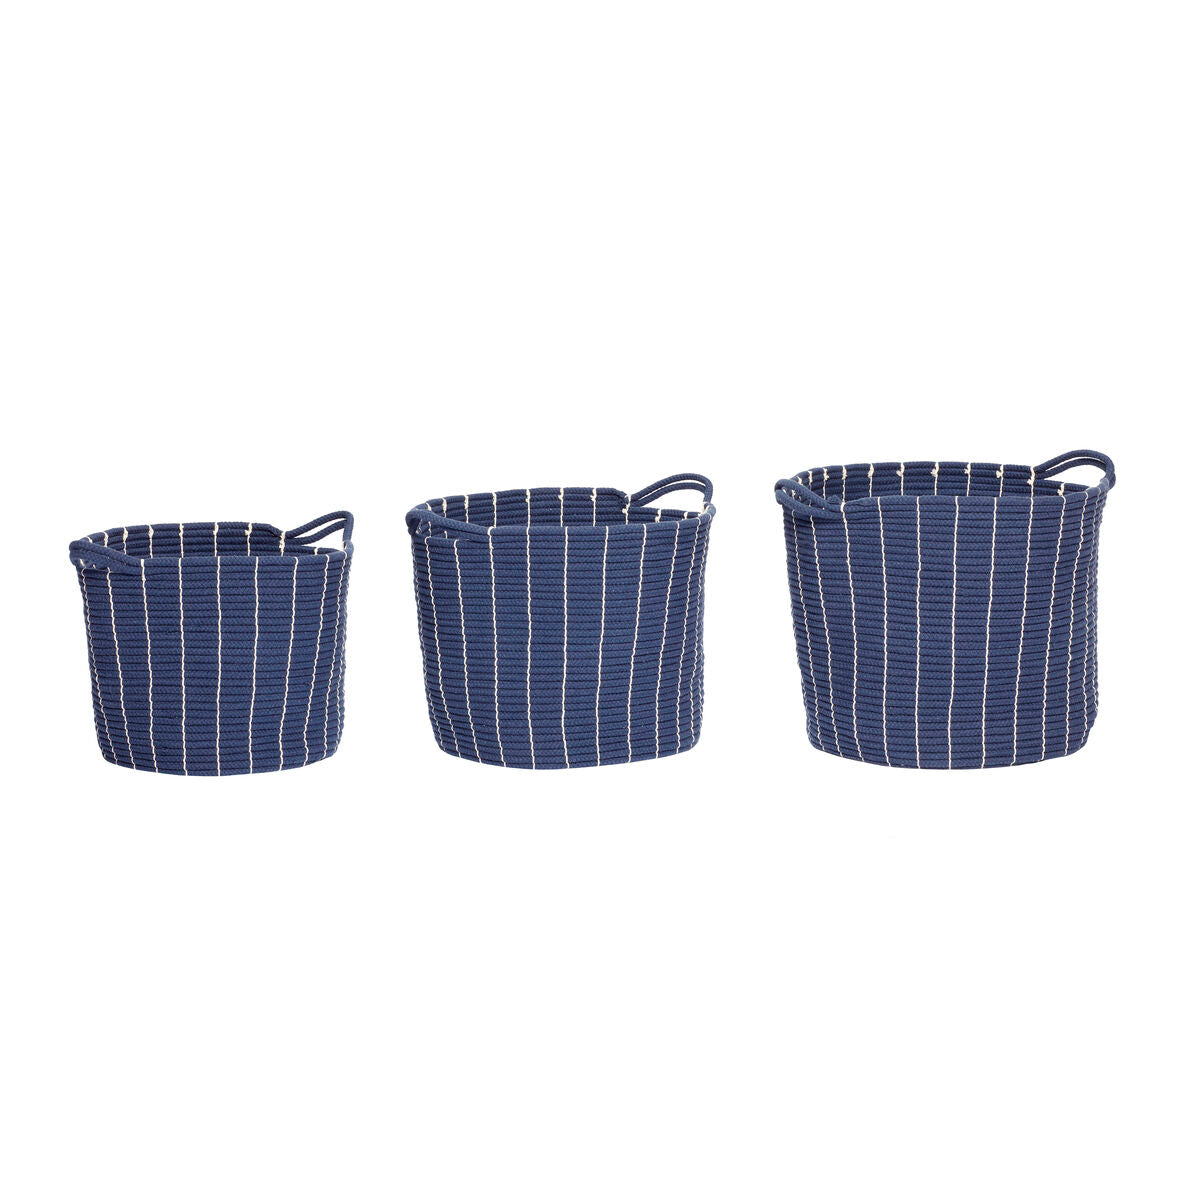 Handy Baskets White/Blue (set of 3)